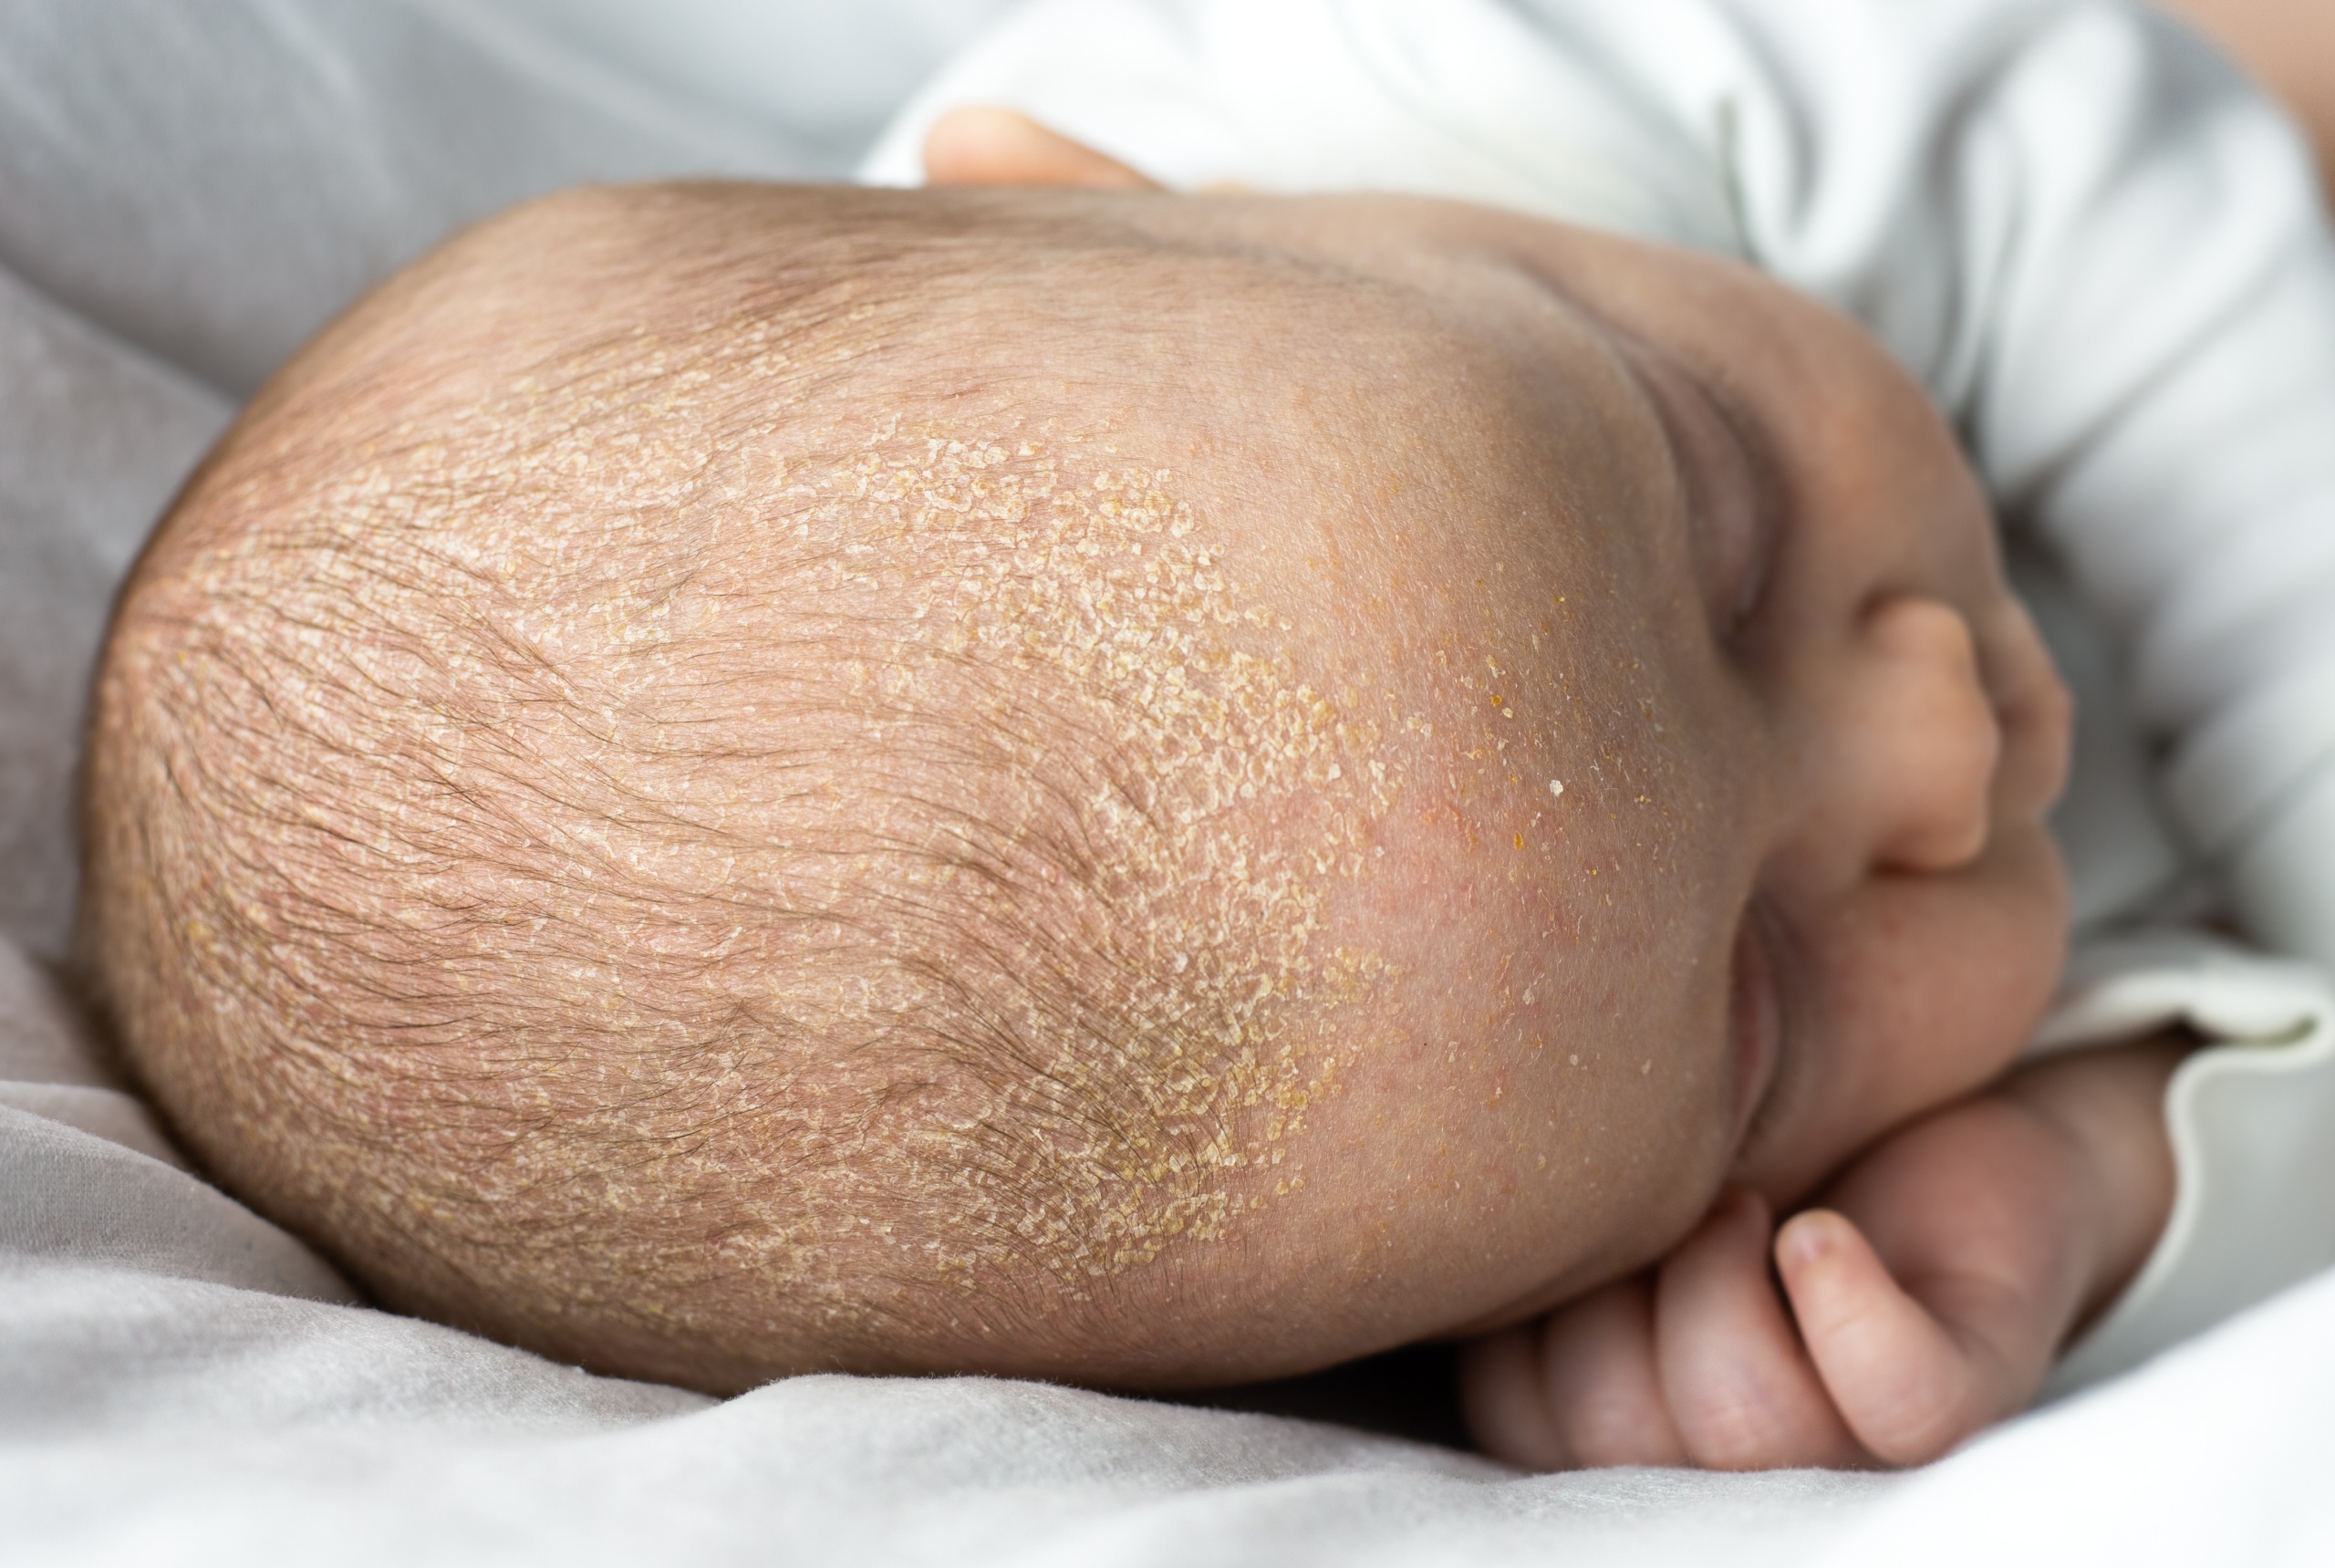 What causes cradle cap in babies?